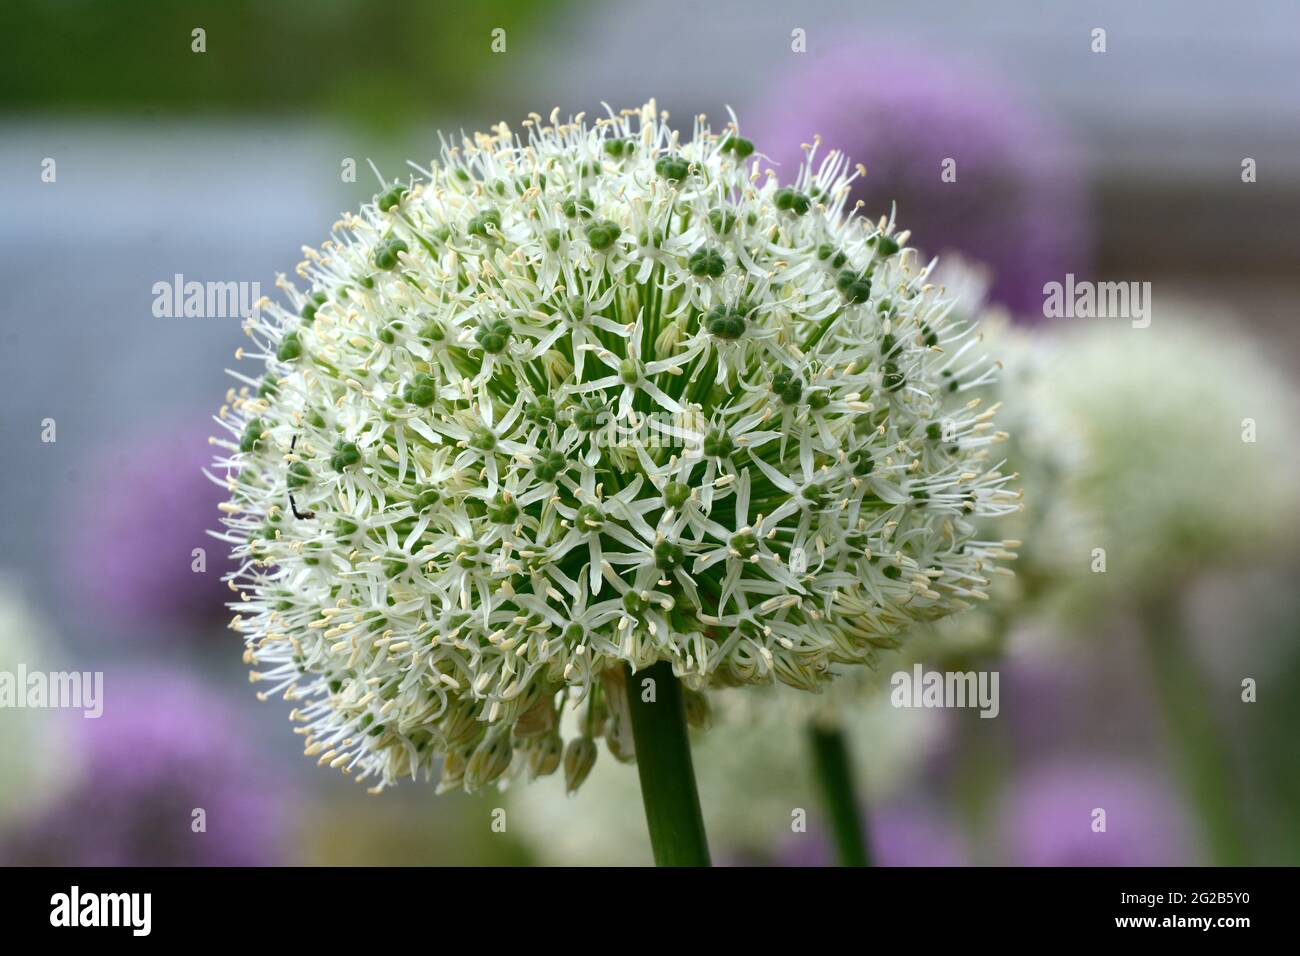 Allium stipitalum Mount Everest fiori bianchi a forma di stella formano palle strettamente impaccate Foto Stock